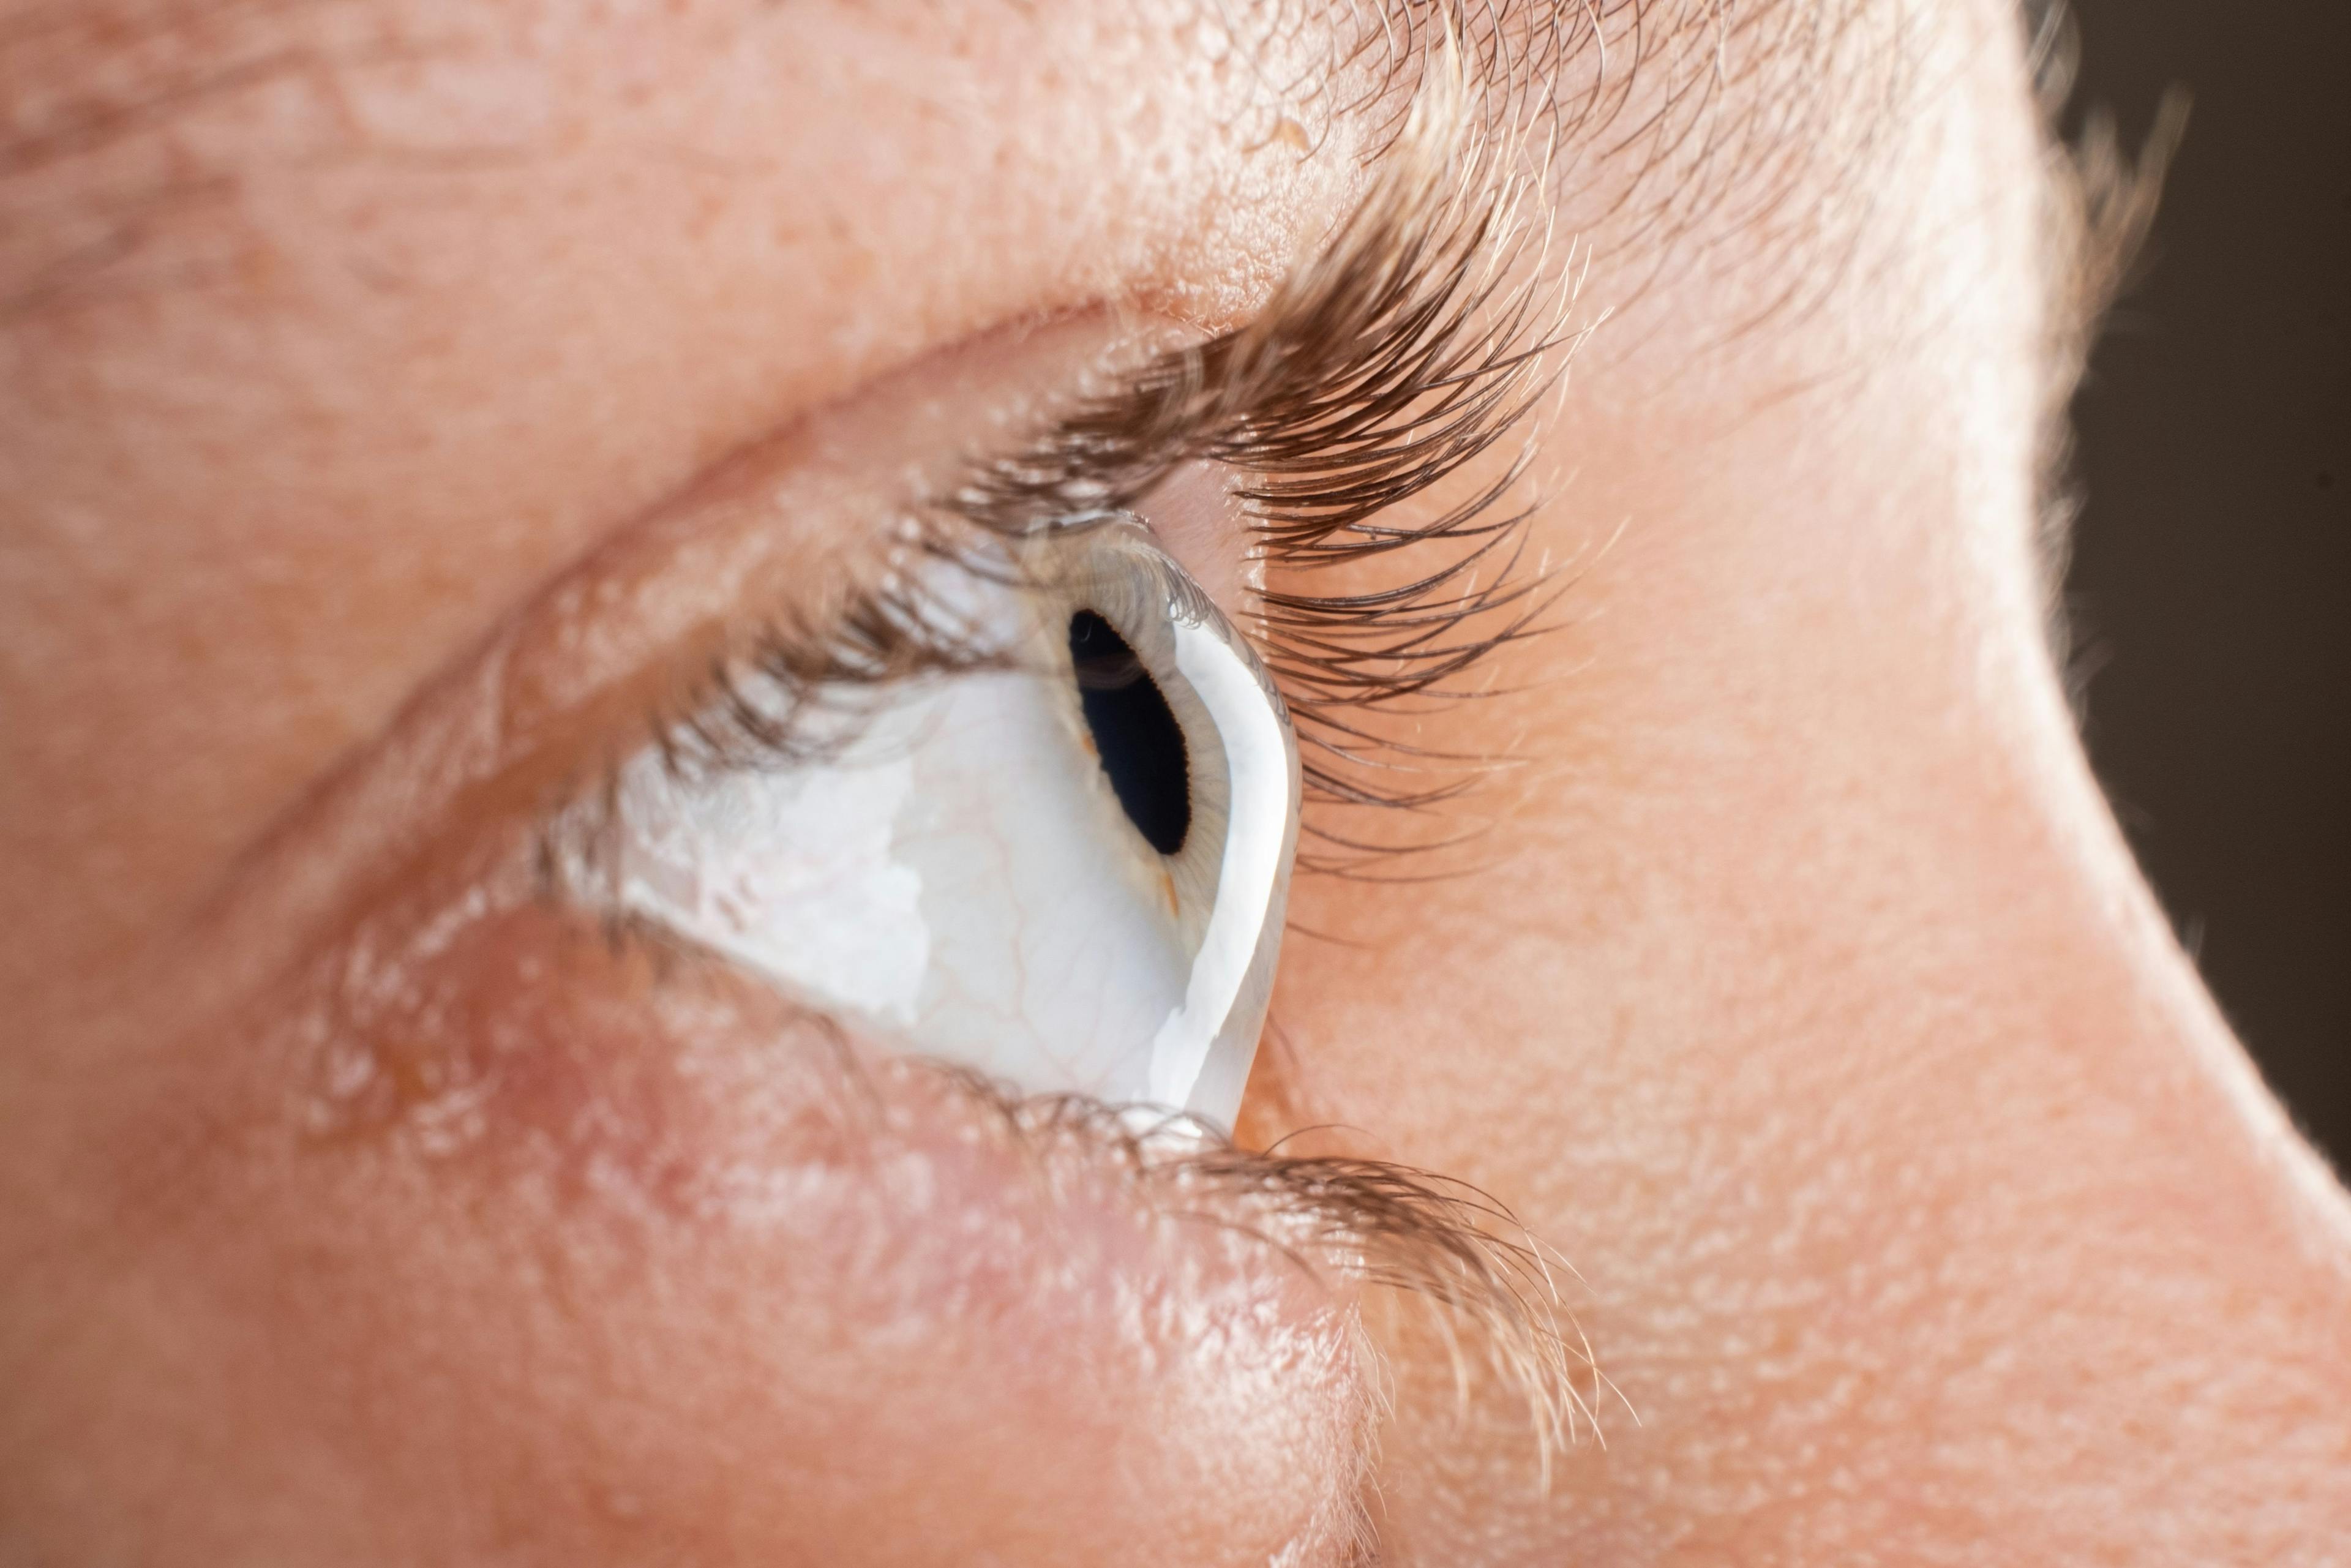 Female eye diagnosed with keratoconus corneal thinning | Image credit: Fukume - stock.adobe.com